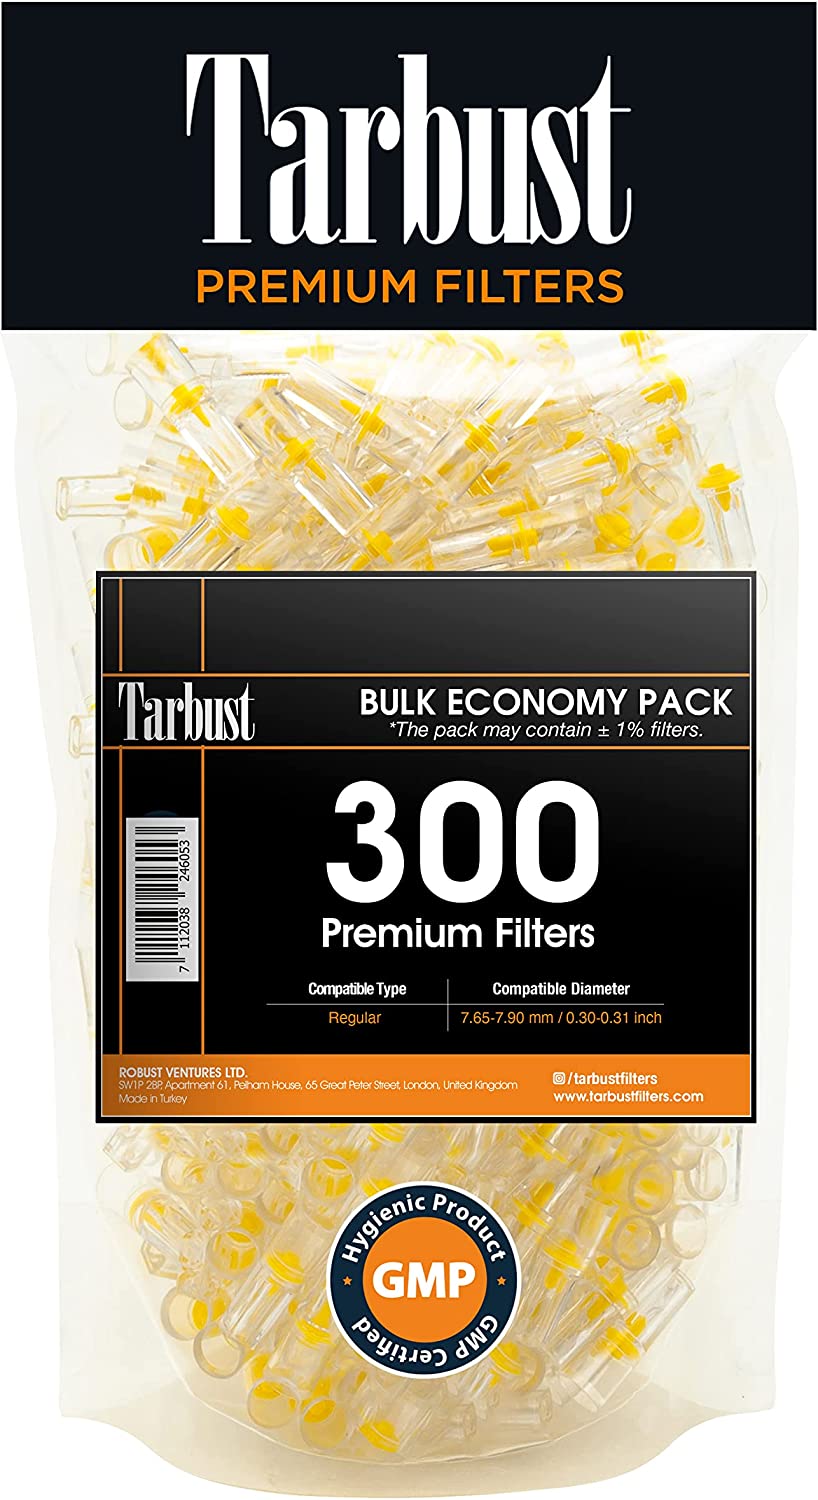  20 Cigarette Filters,Tar Trap Mint Filter, Filter Tips